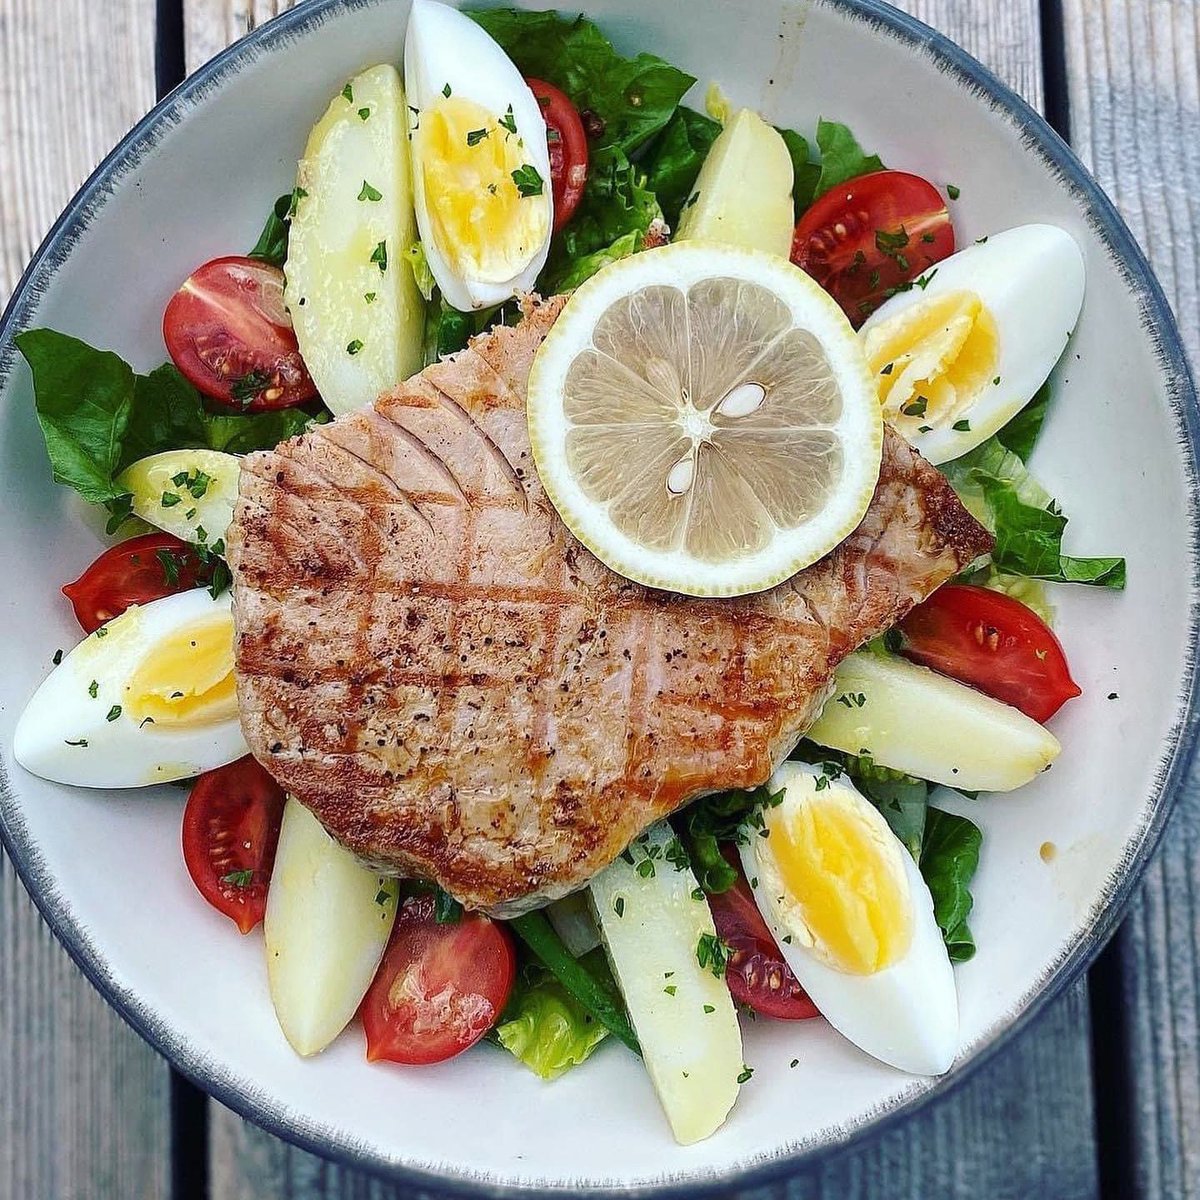 Our amazing Tuna steak, Niçoise salad, back on our summer menu from next week ☀️ 😊

#tuna #tunanicoisesalad #tunasteak #tunanicoise #fishsalad #oldblackbullraskelf